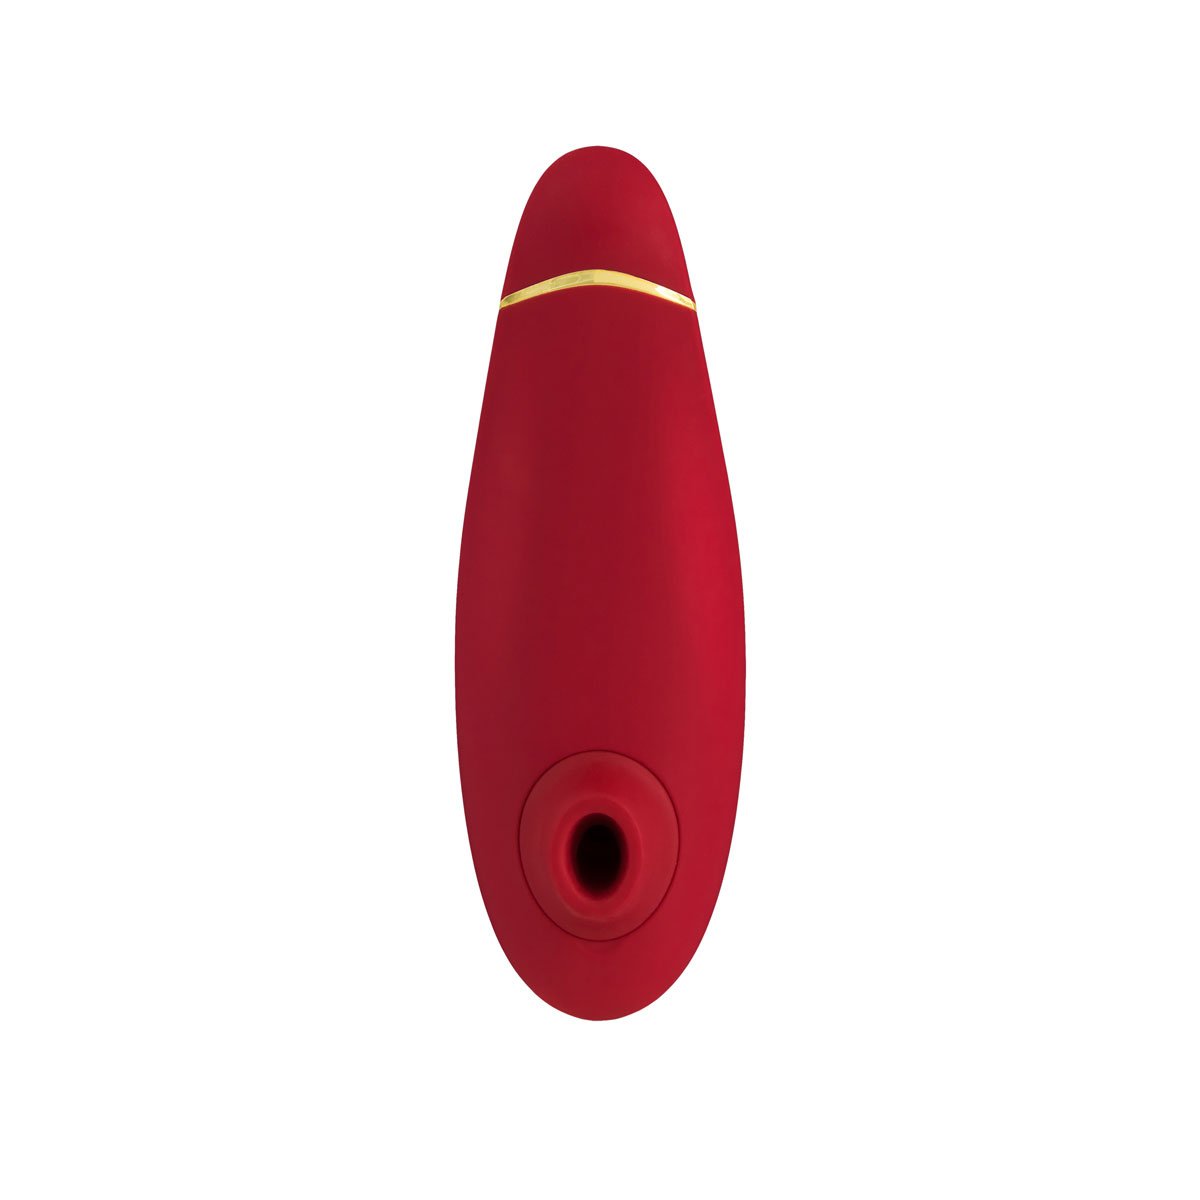 Womanizer Premium Bundle “Lady in Red” with Sugar Sak Antimicrobial Storage Bag - Hamilton Park Electronics